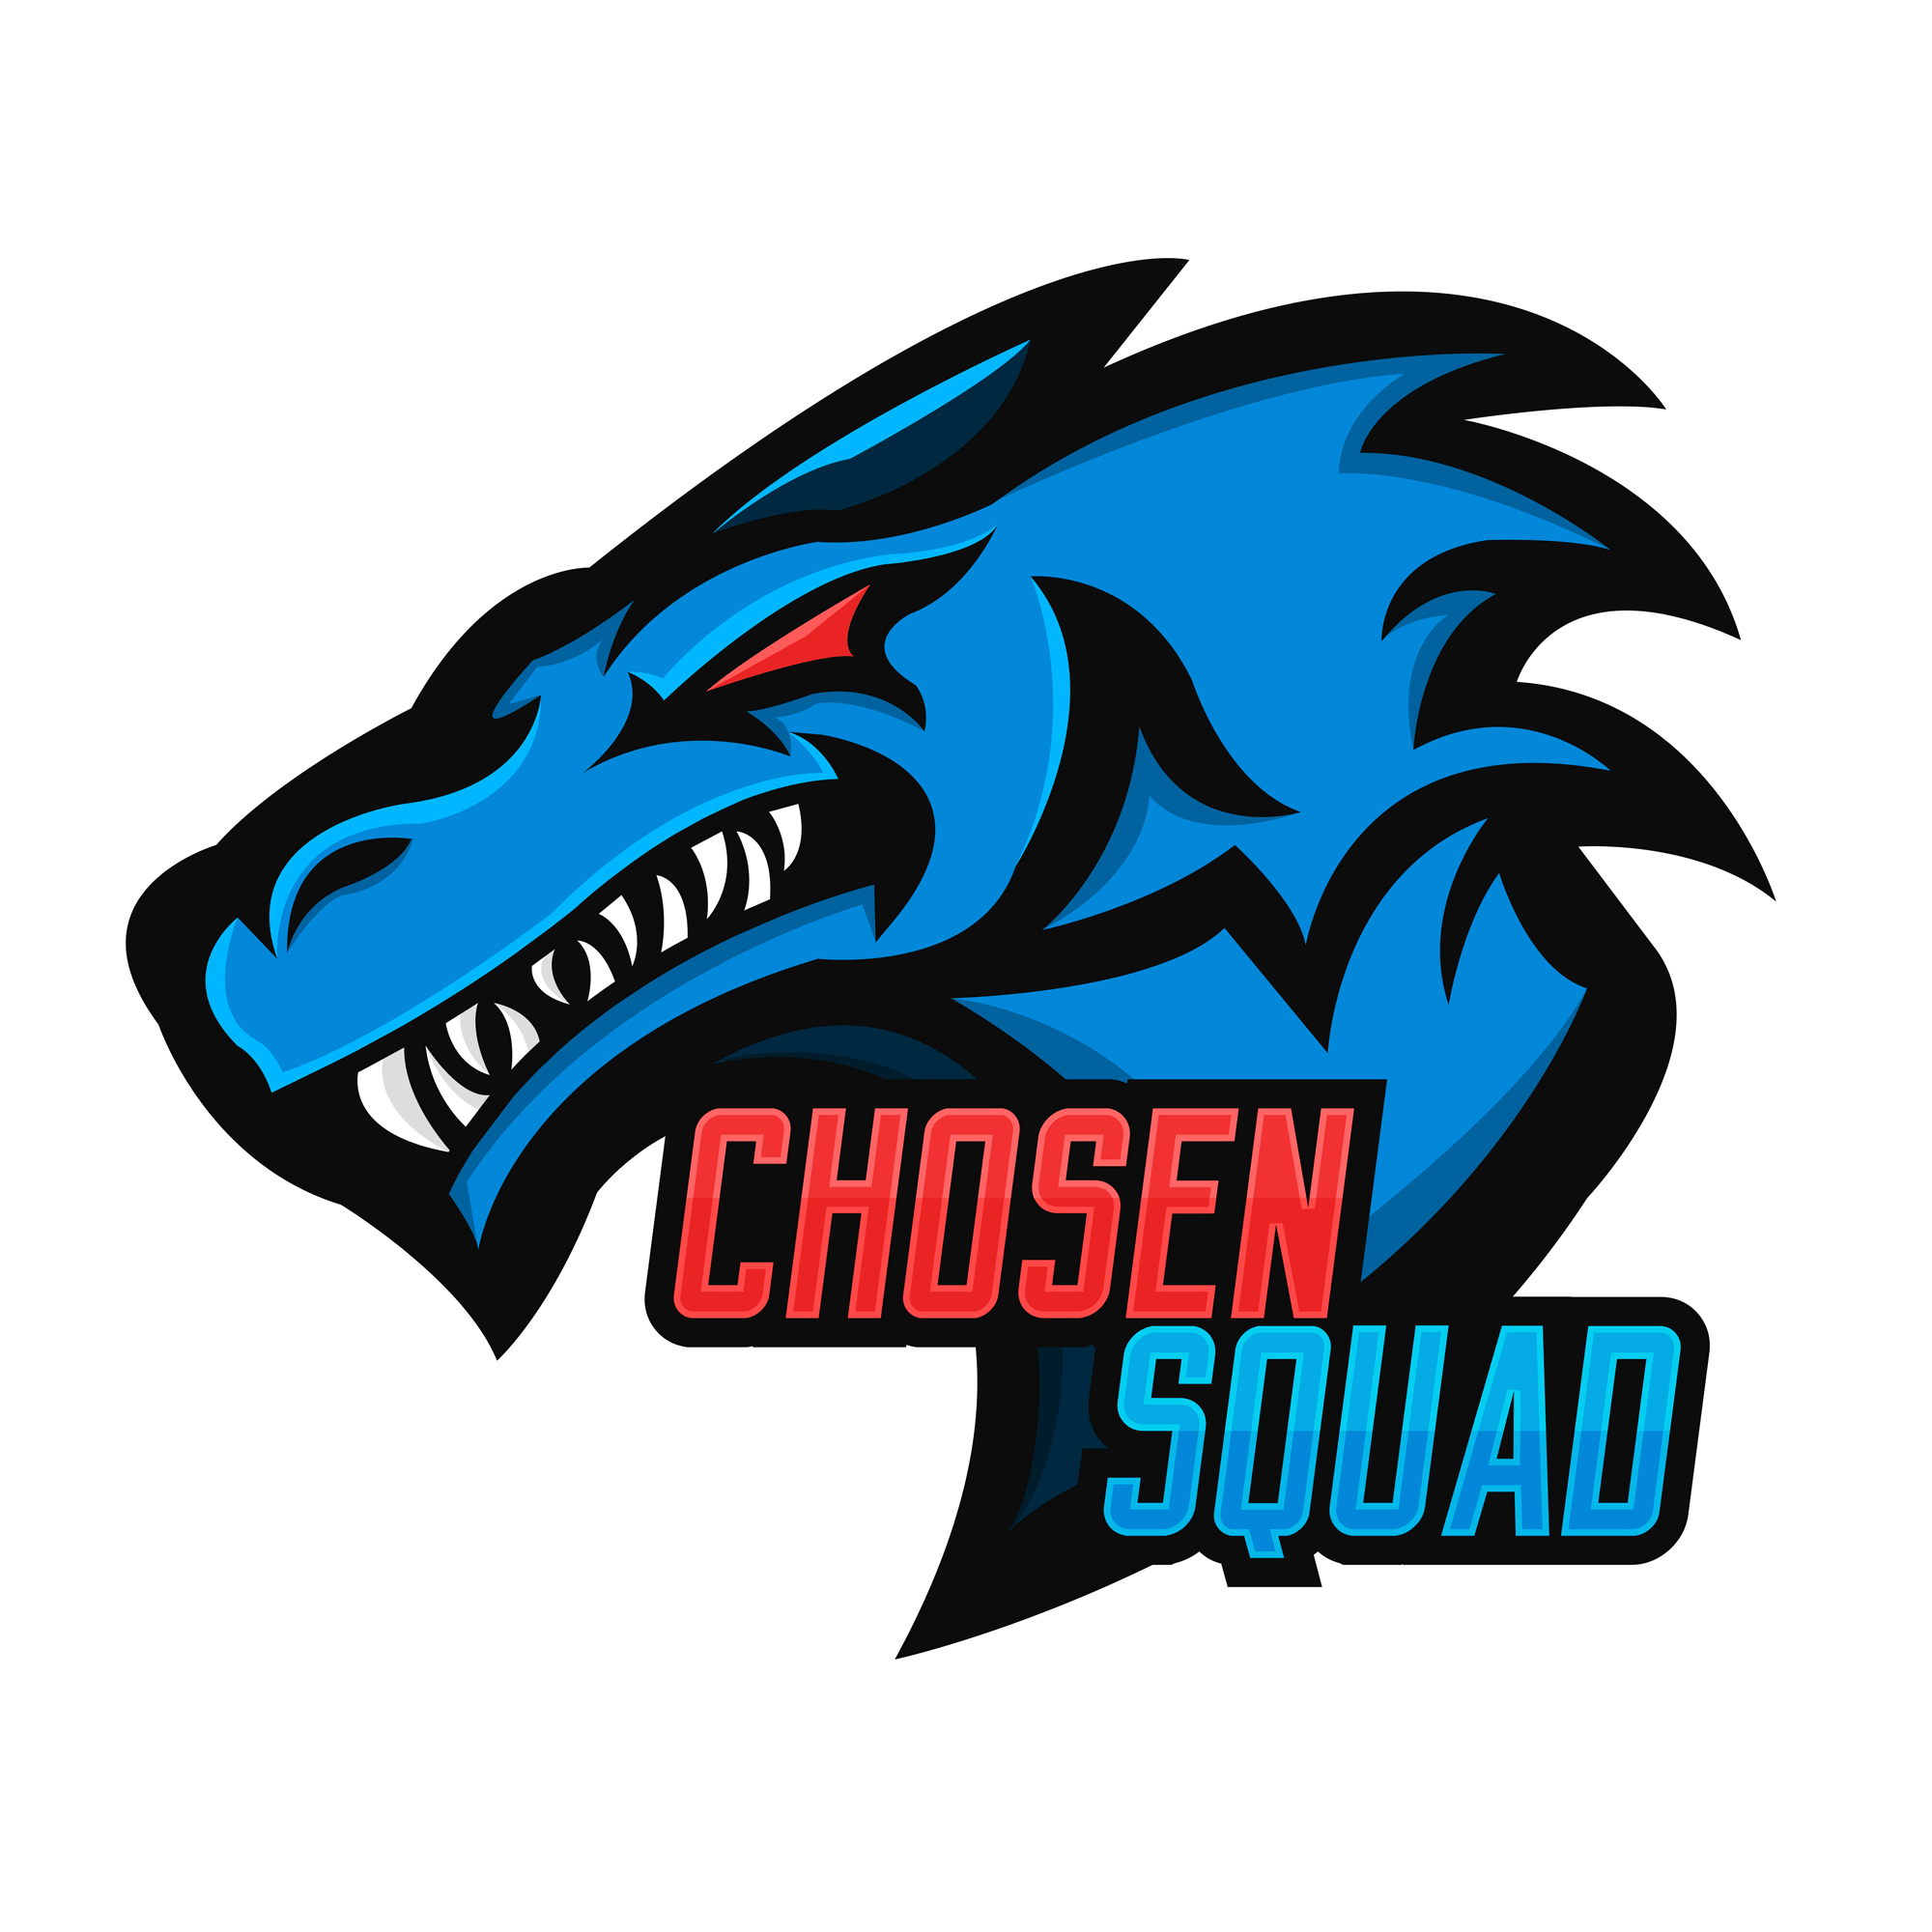 Squad Logo - Chosen Squad Logo - Imgur